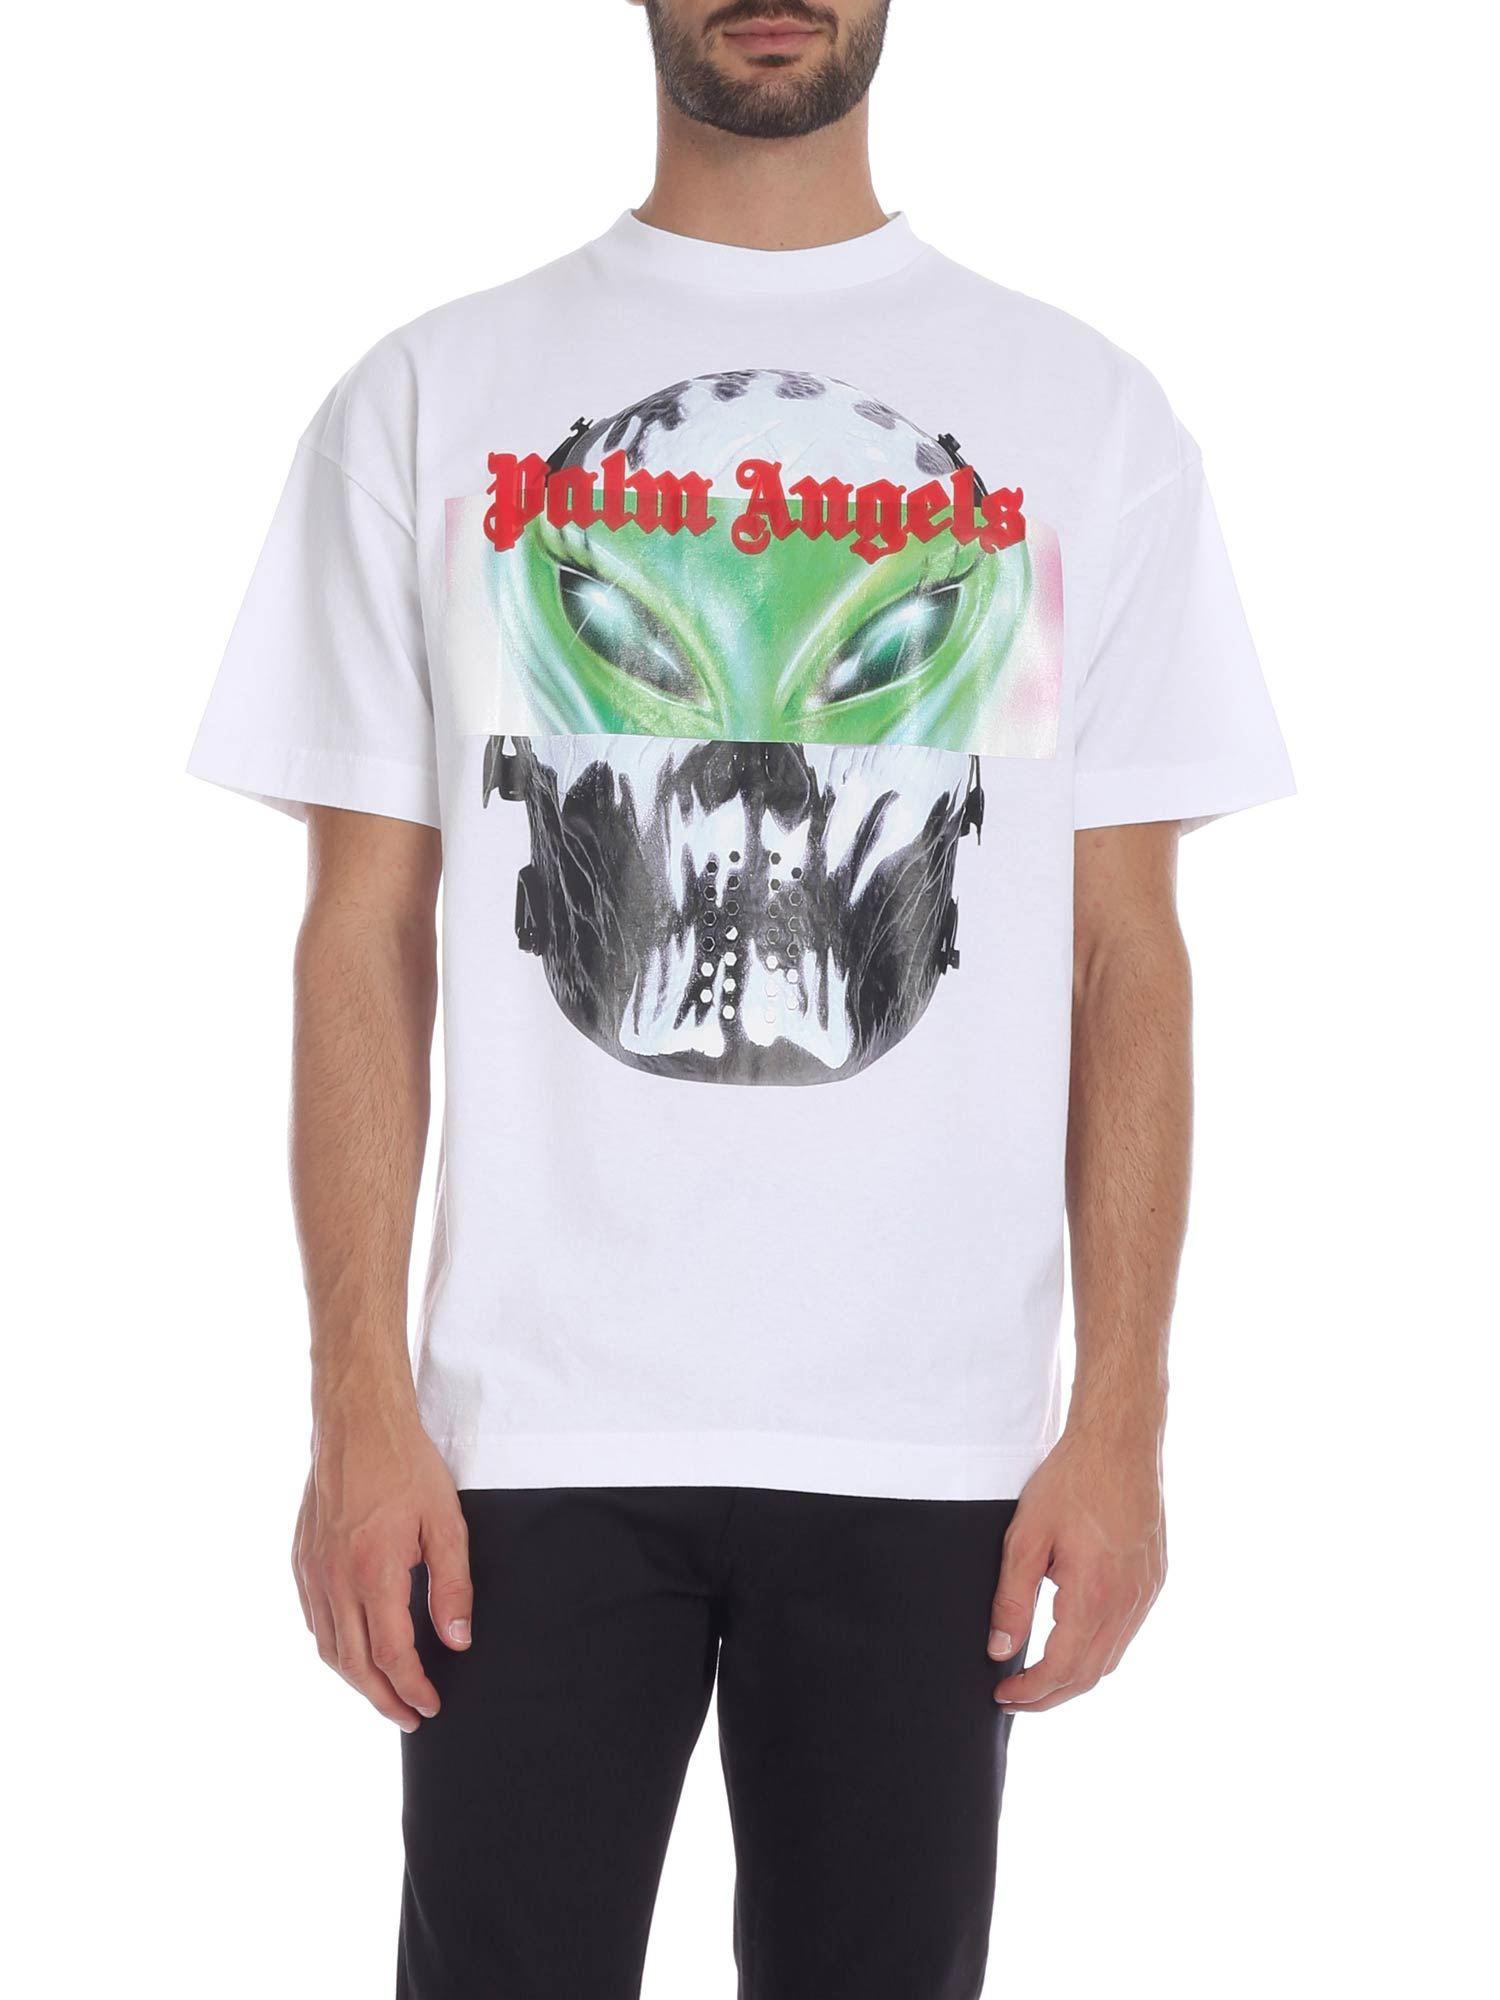 palm angels alien t shirt